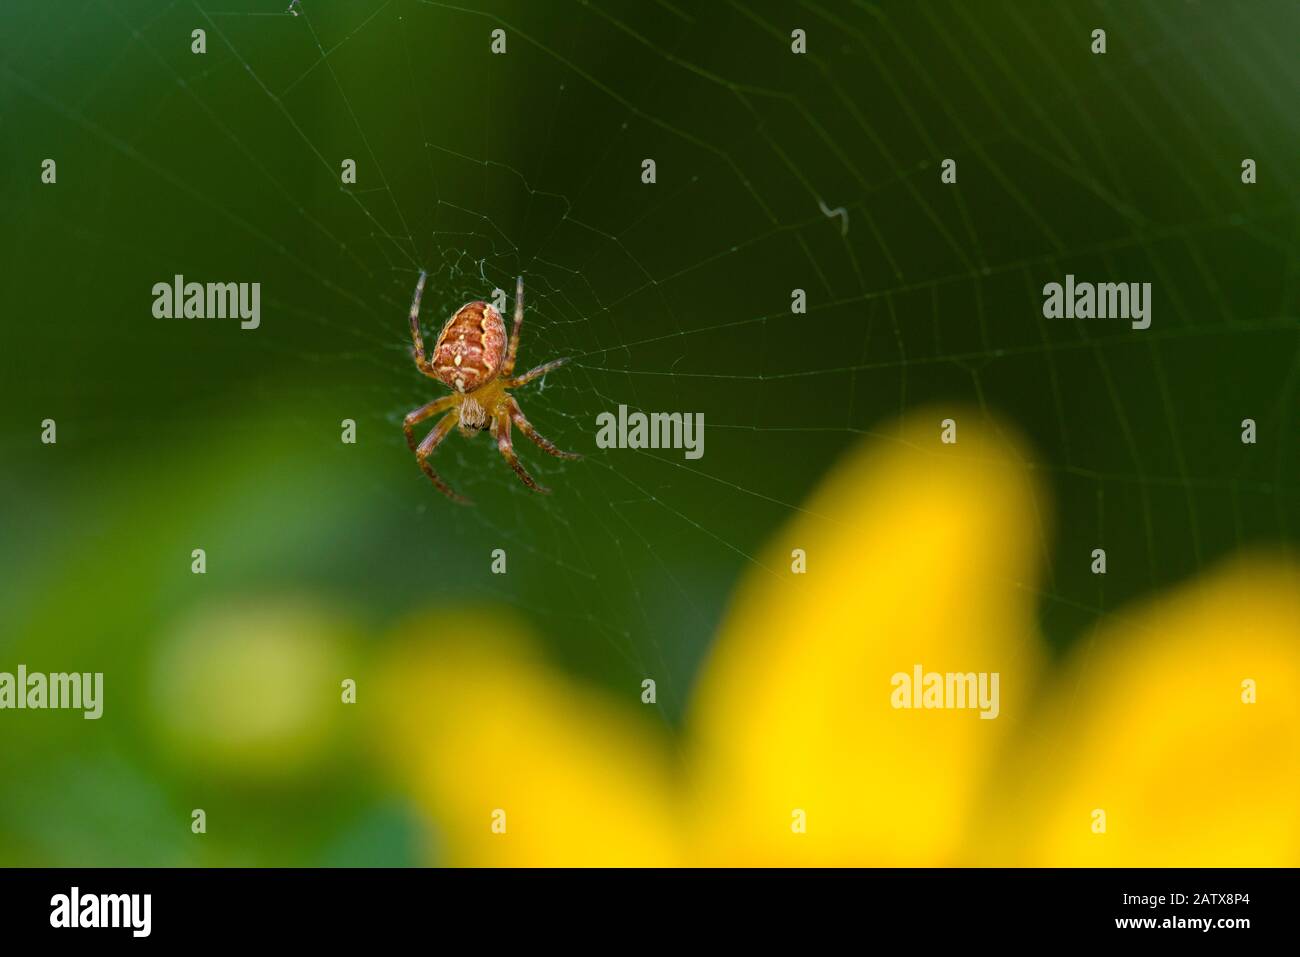 A male European Garden Spider (Araneus diadematus) on its web. Stock Photo